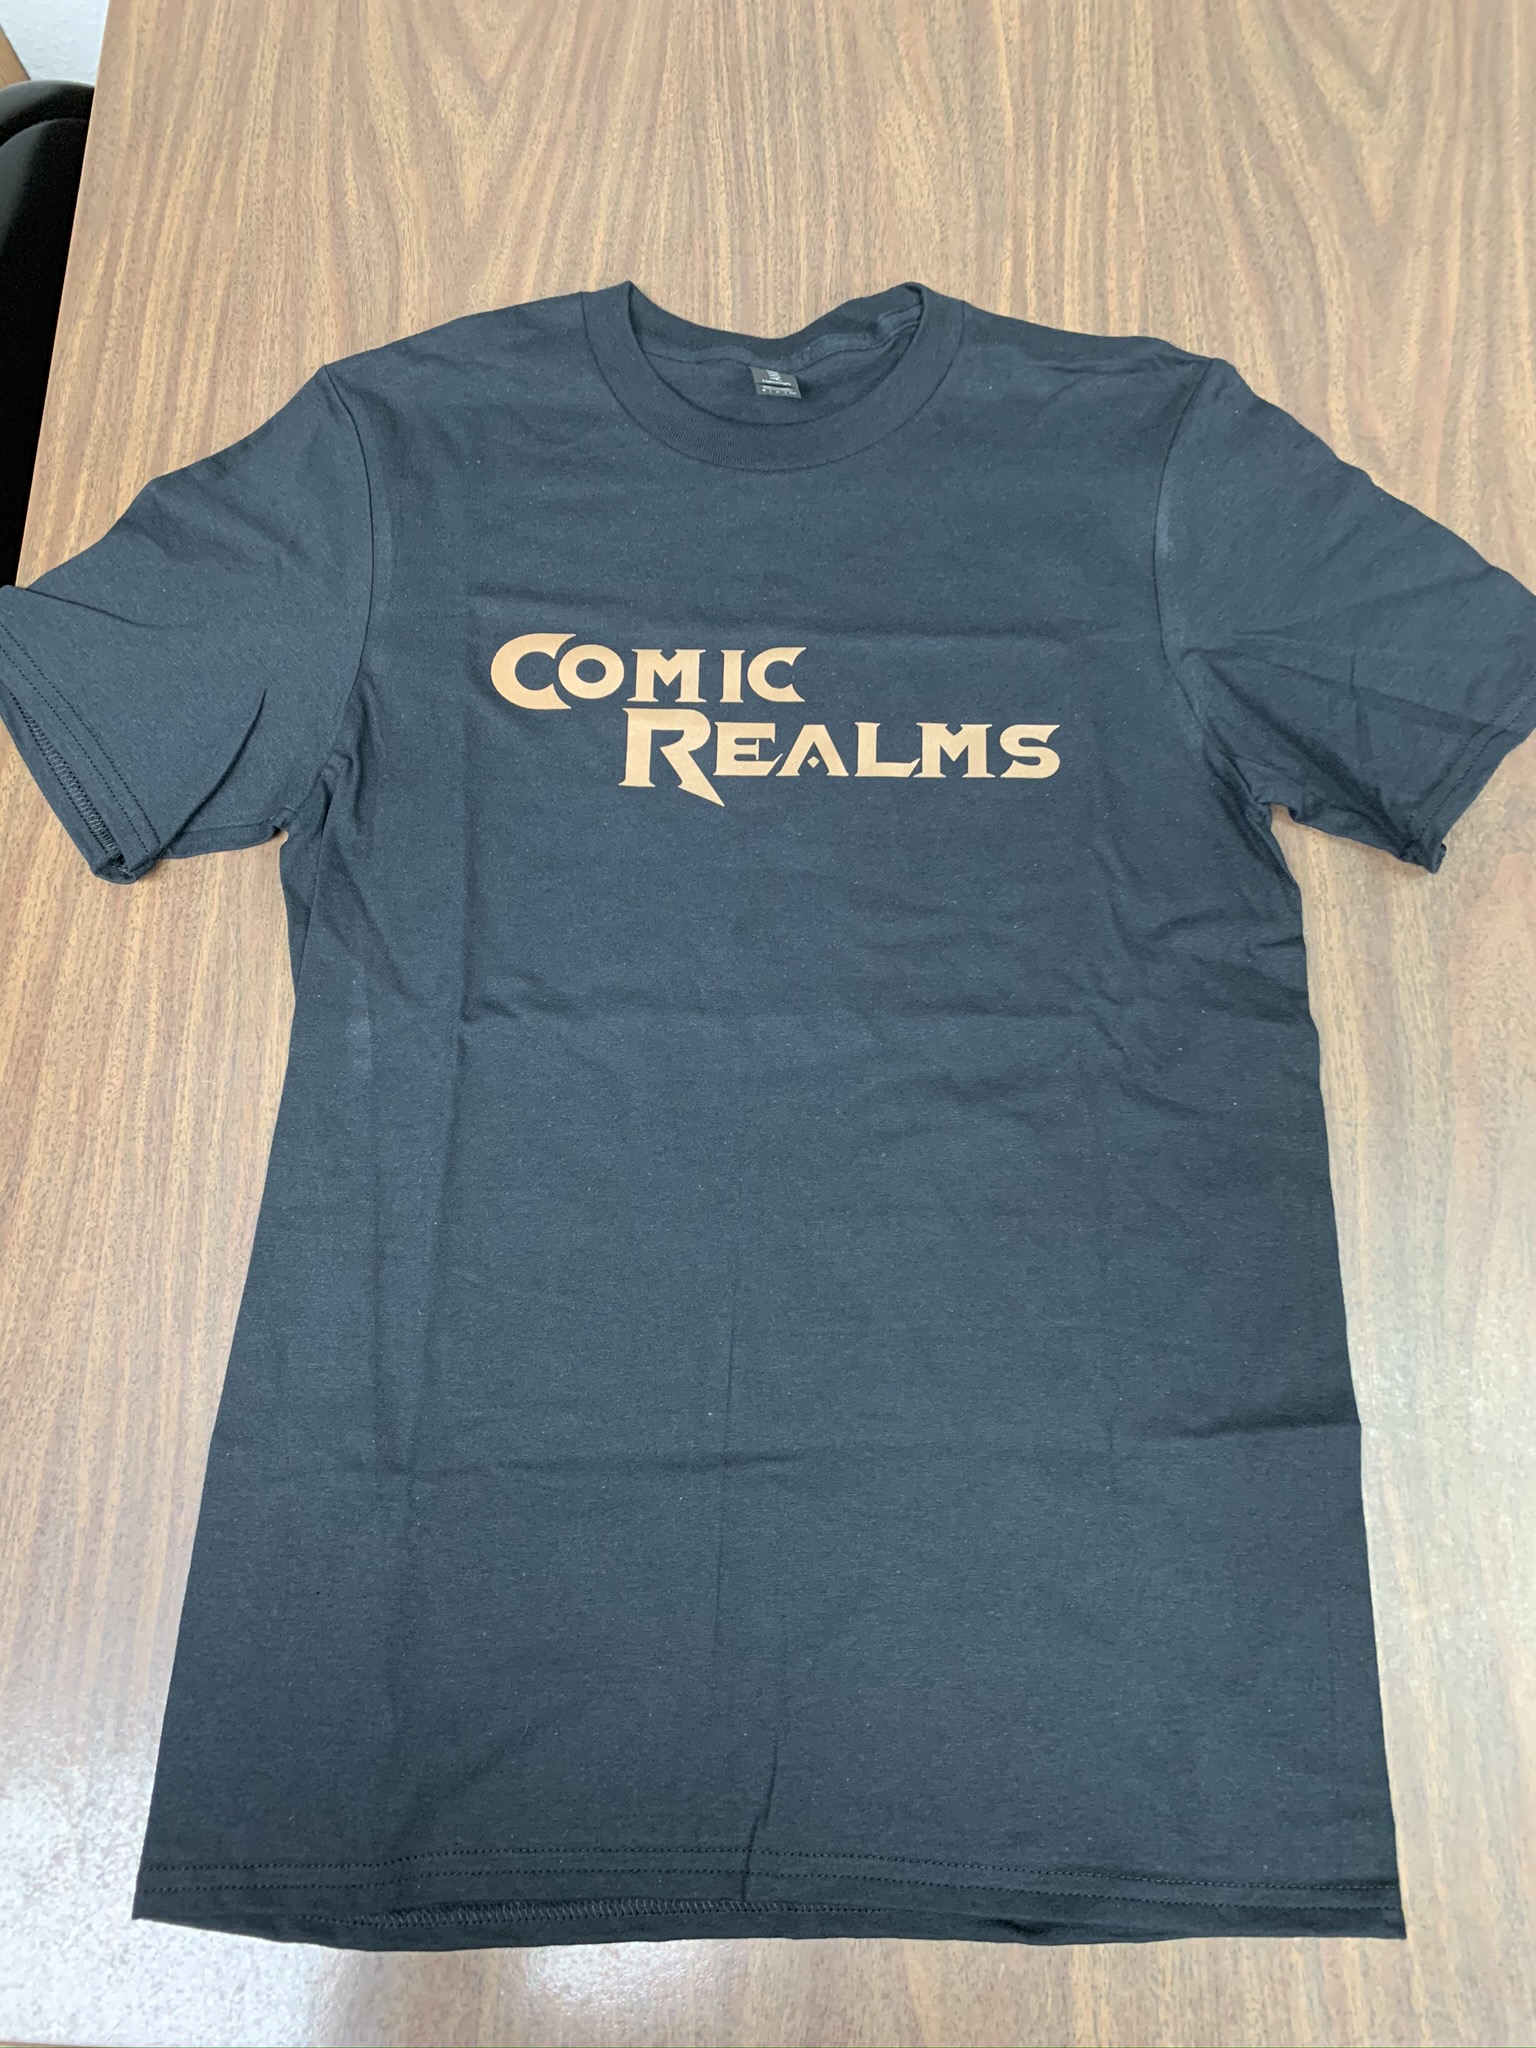 Comic Realms T-Shirt Medium Black/Copper